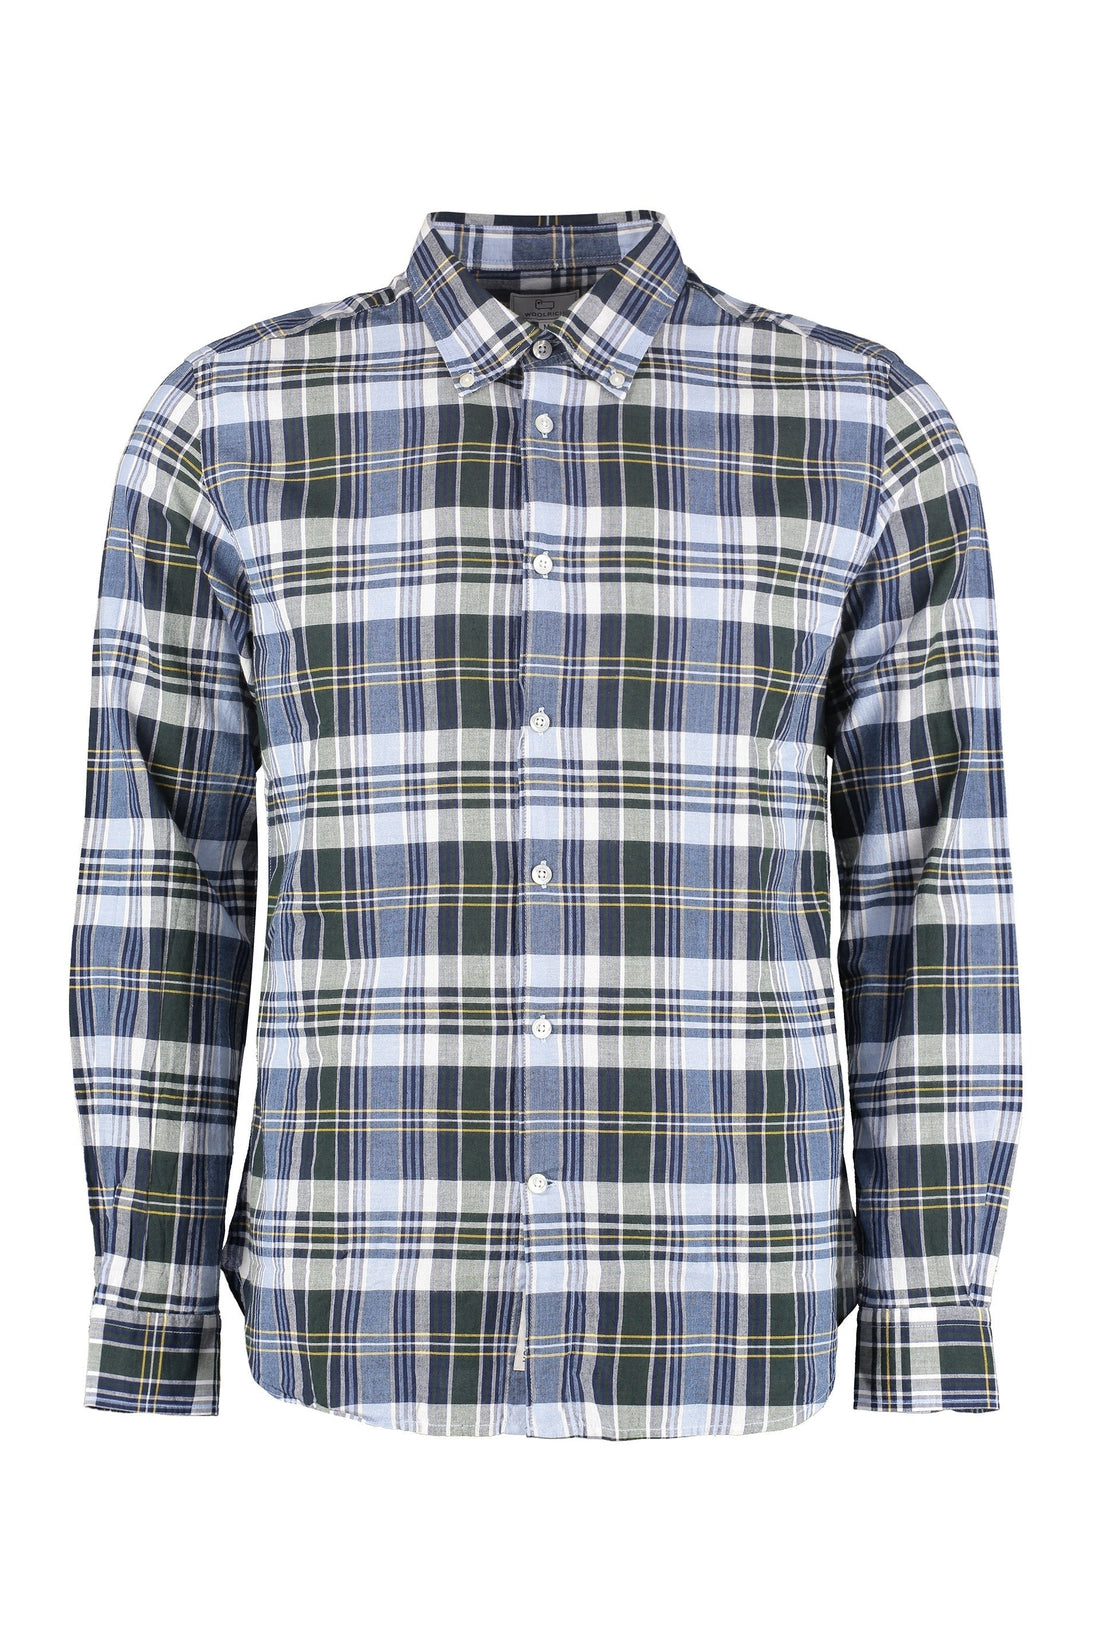 Woolrich-OUTLET-SALE-Checked cotton shirt-ARCHIVIST